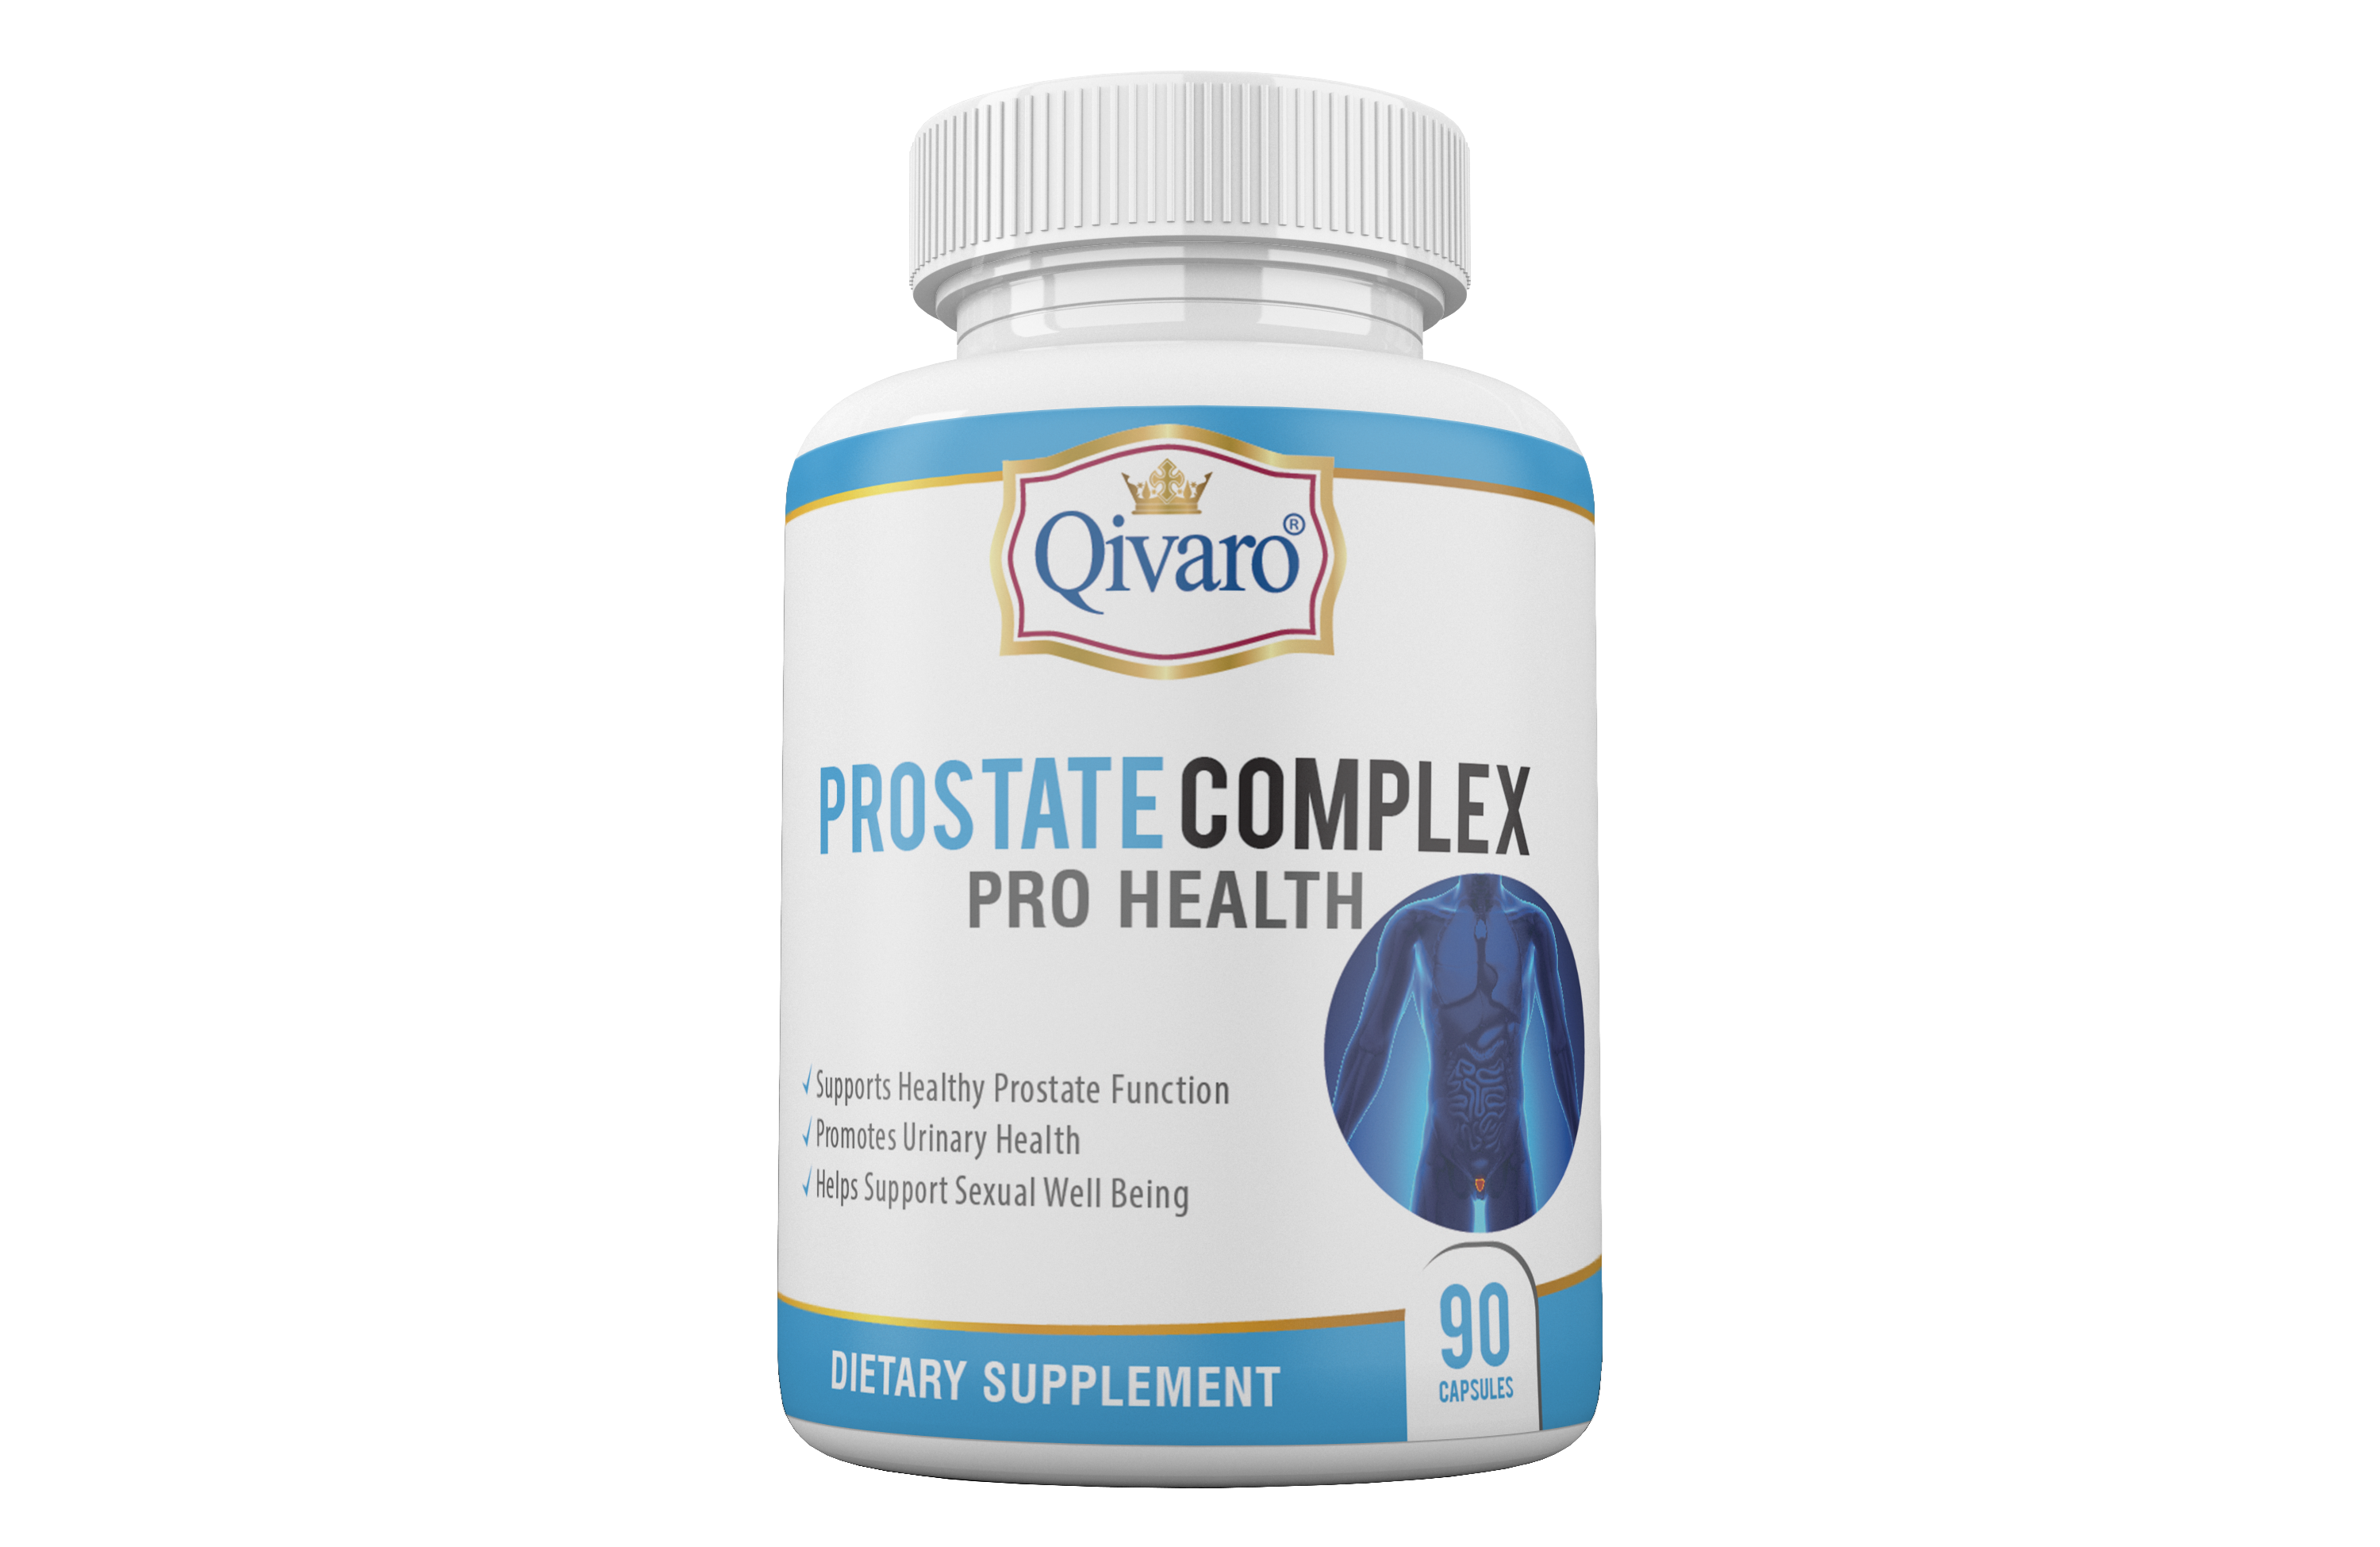 QIH45: Prostate Complex Pro Health by Qivaro